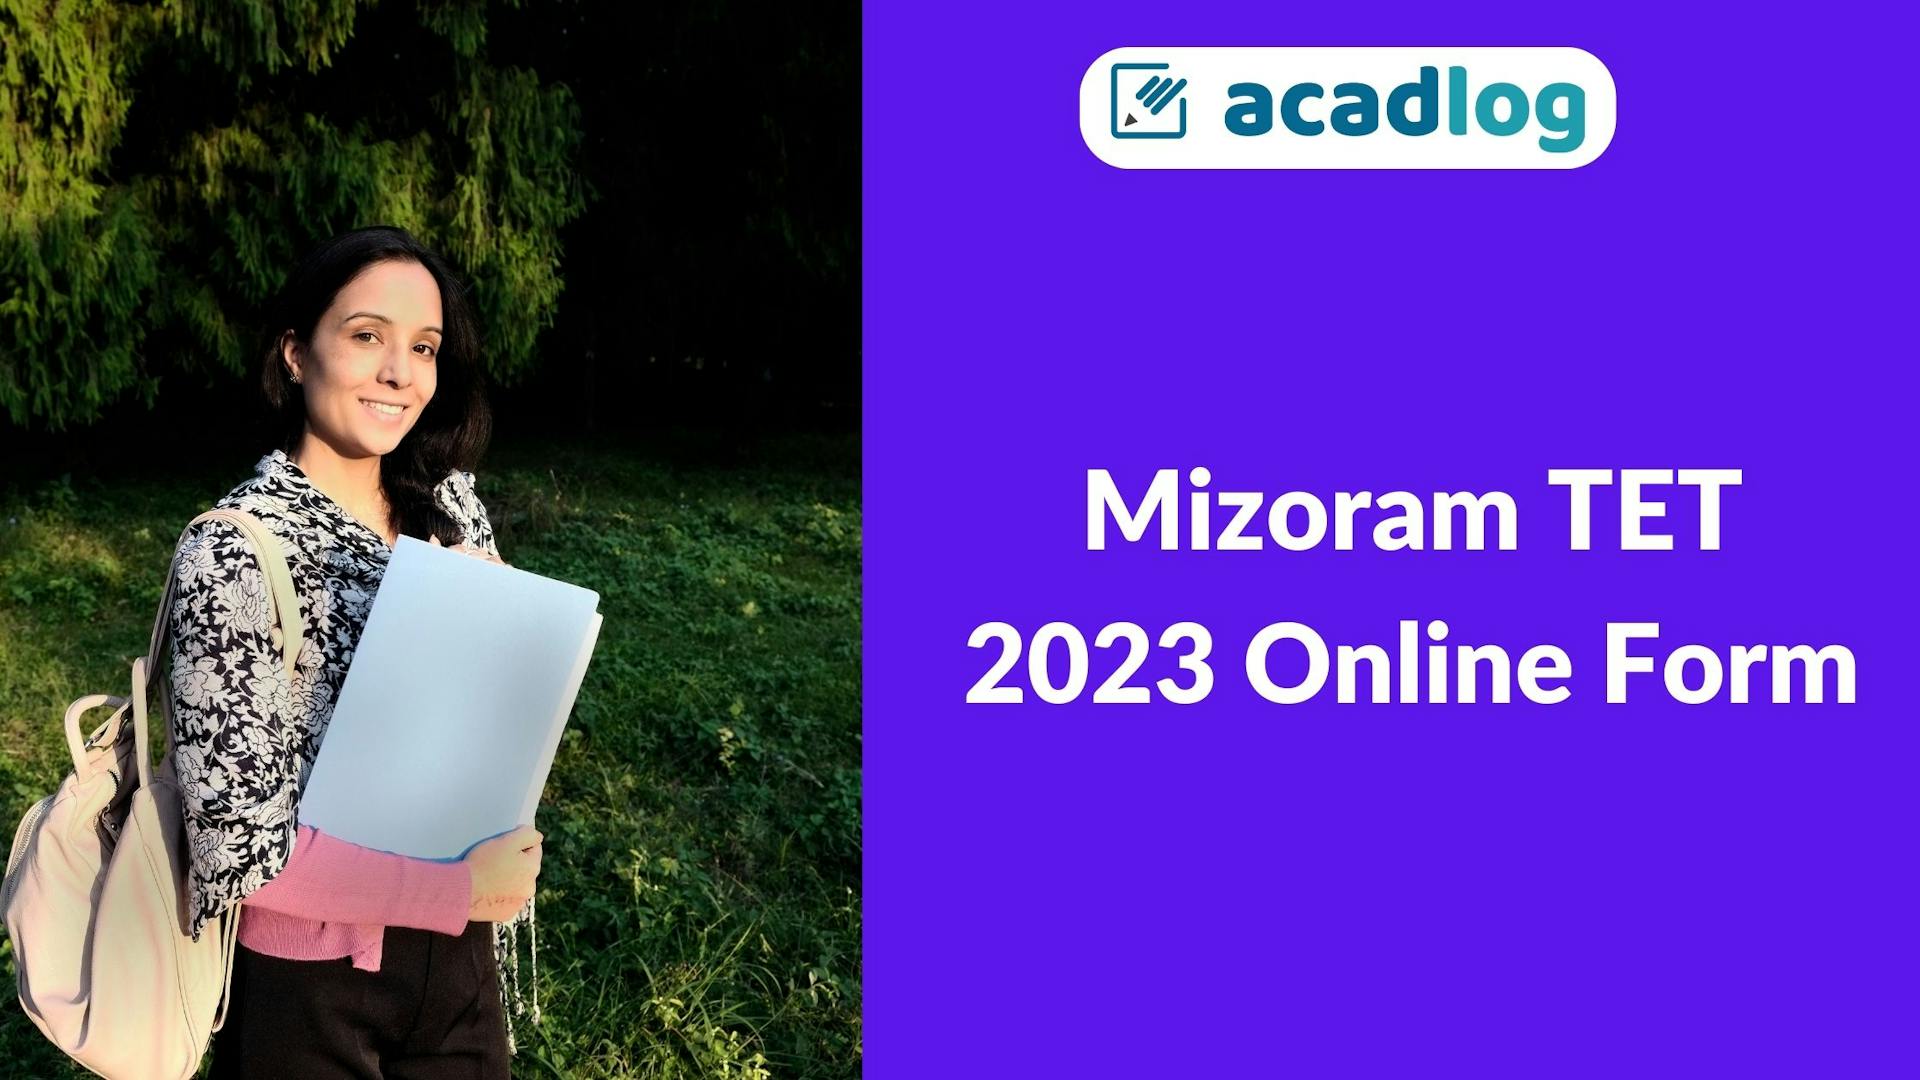 Mizoram TET 2023 Online Form